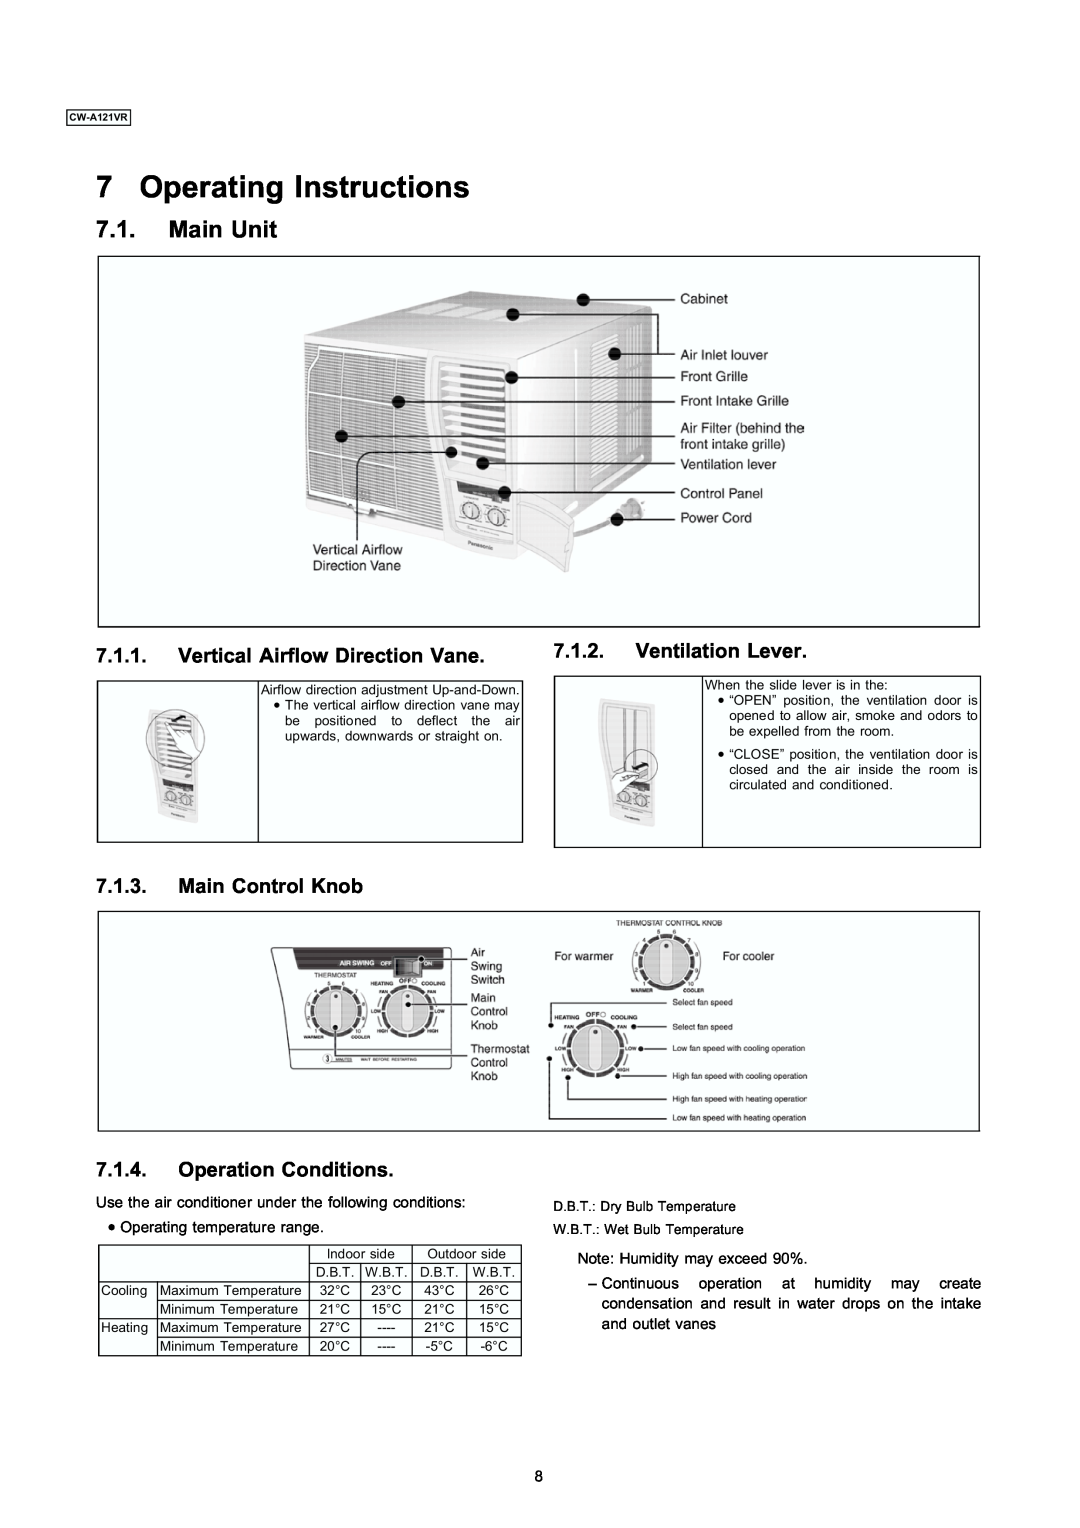 Panasonic CW-A121VR manual Operating Instructions, Main Unit, Vertical Airflow Direction Vane, Ventilation Lever 